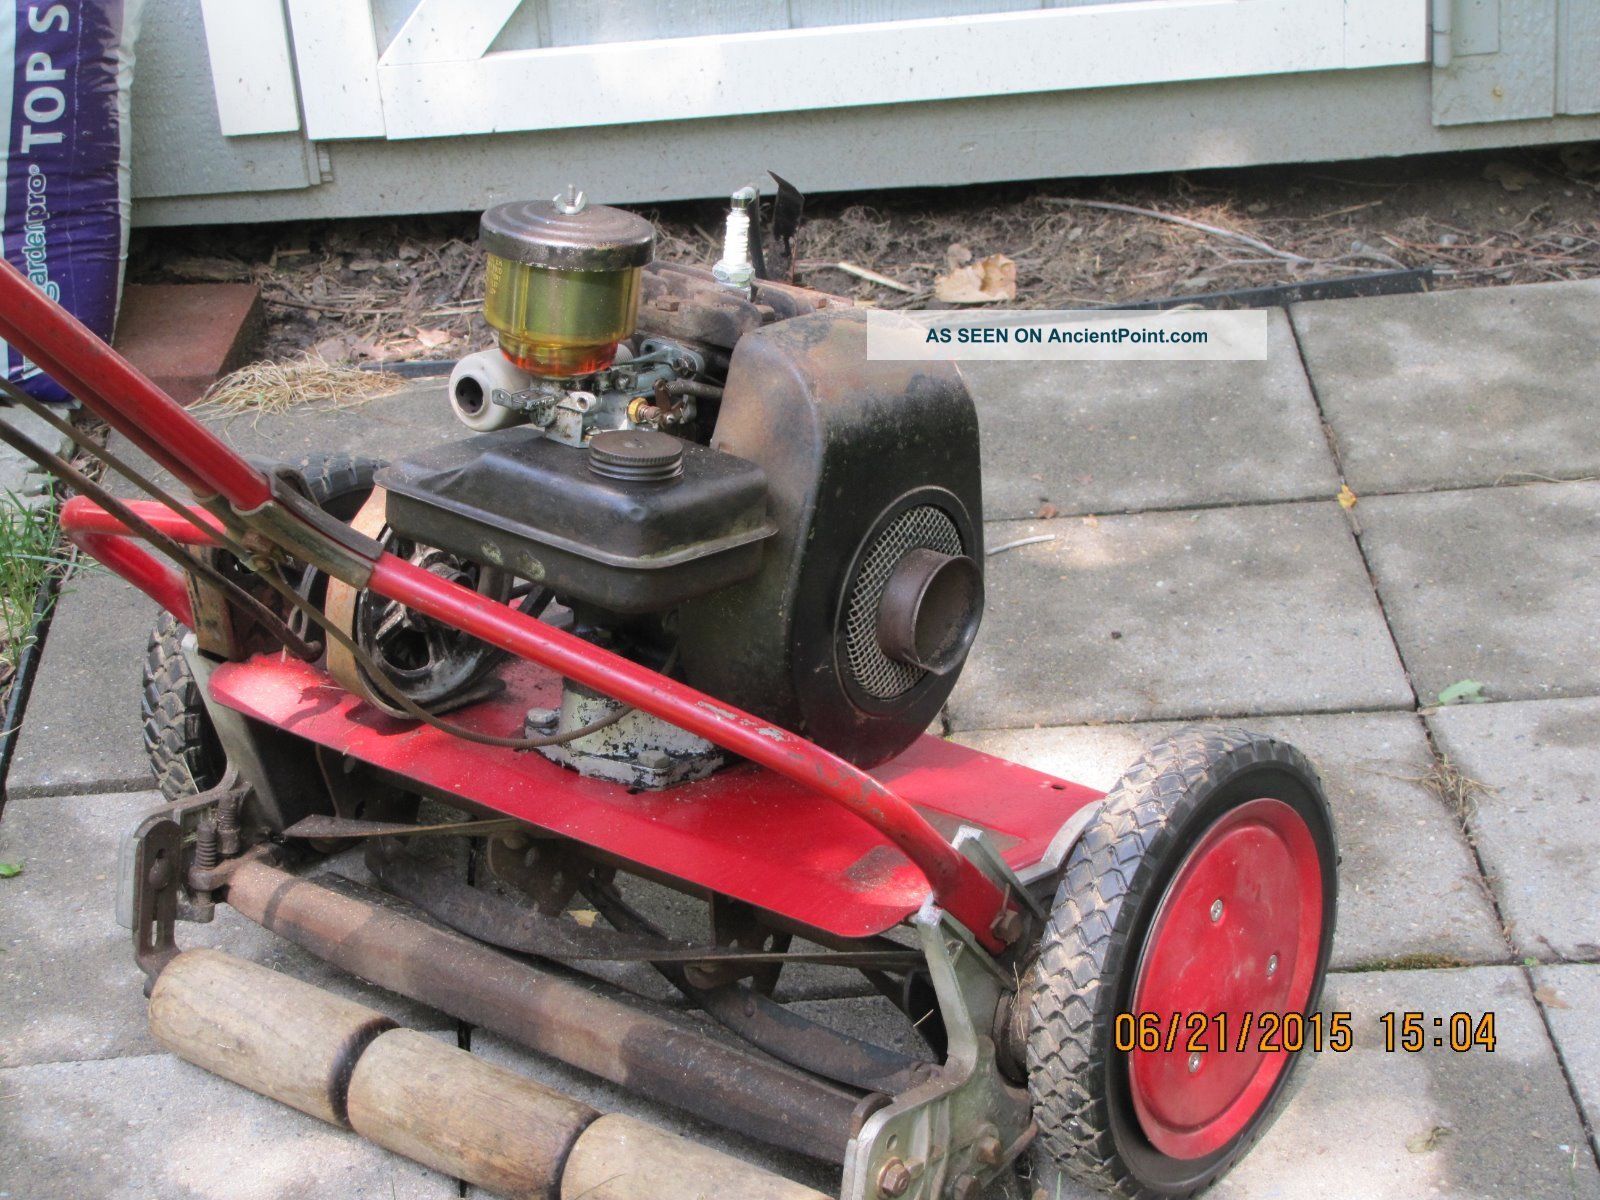 Antique Reel Powered Lawn Mower